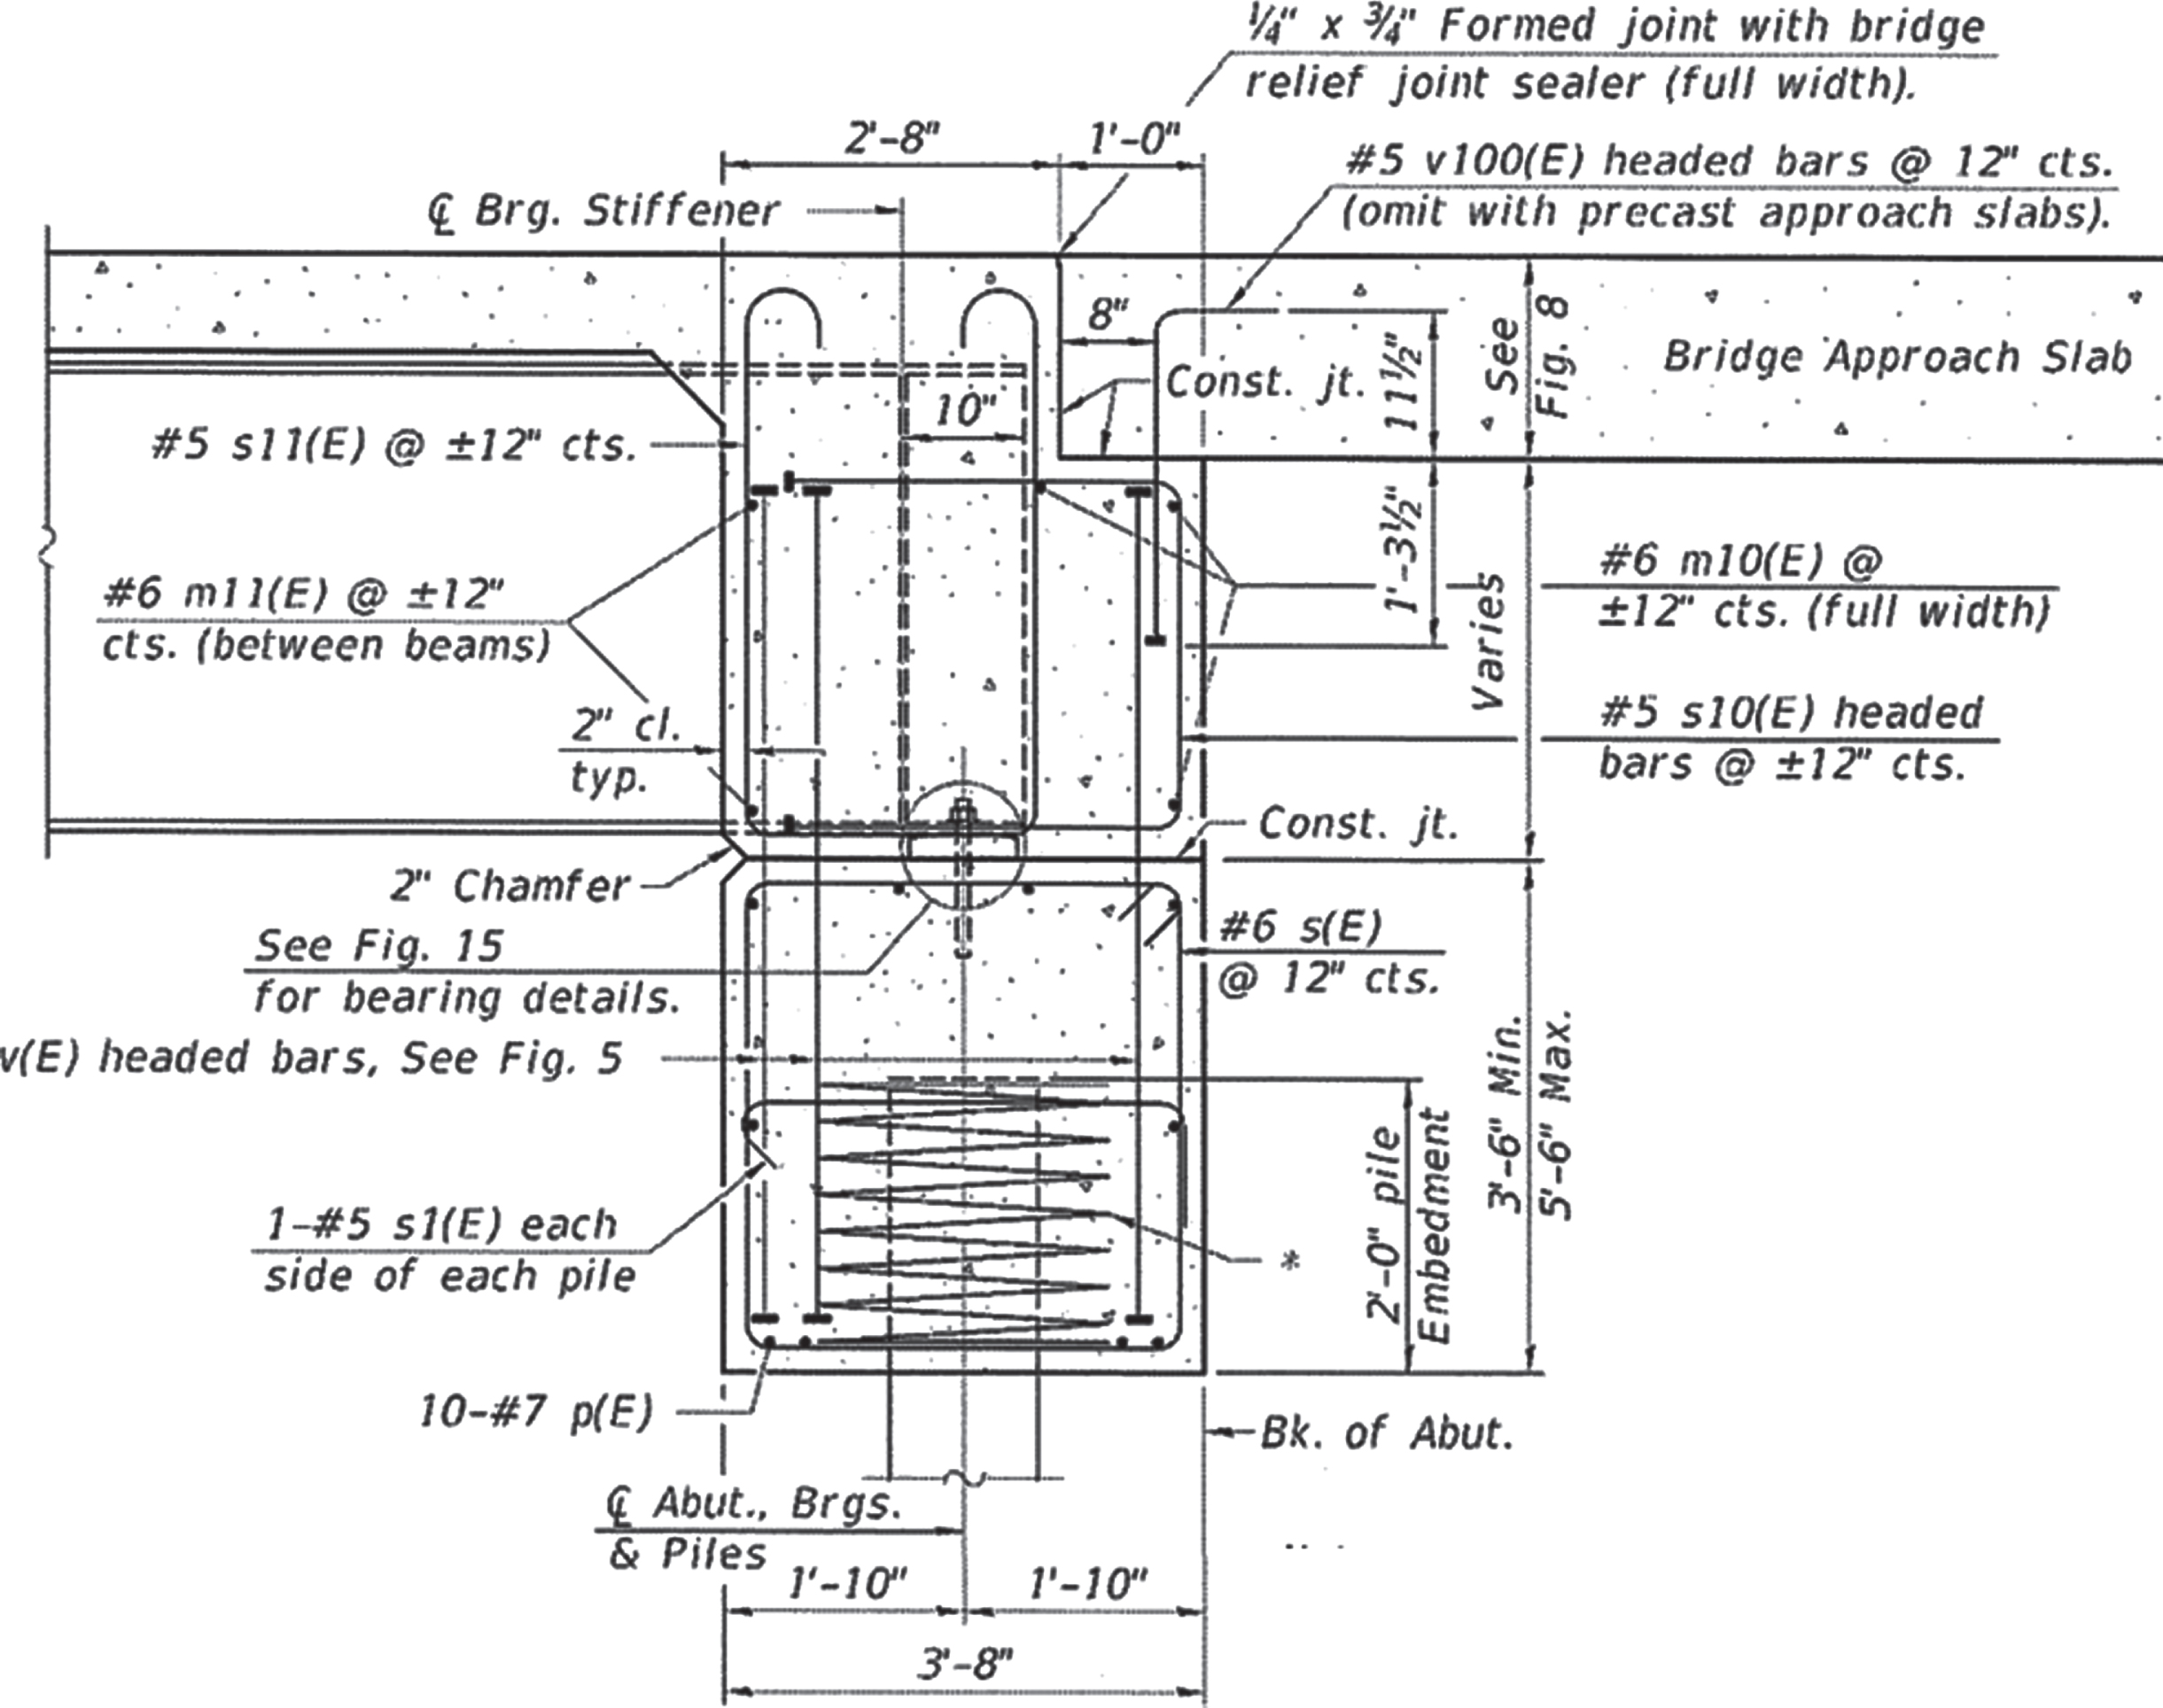 IDOT integral abutment details for steel girders [17].